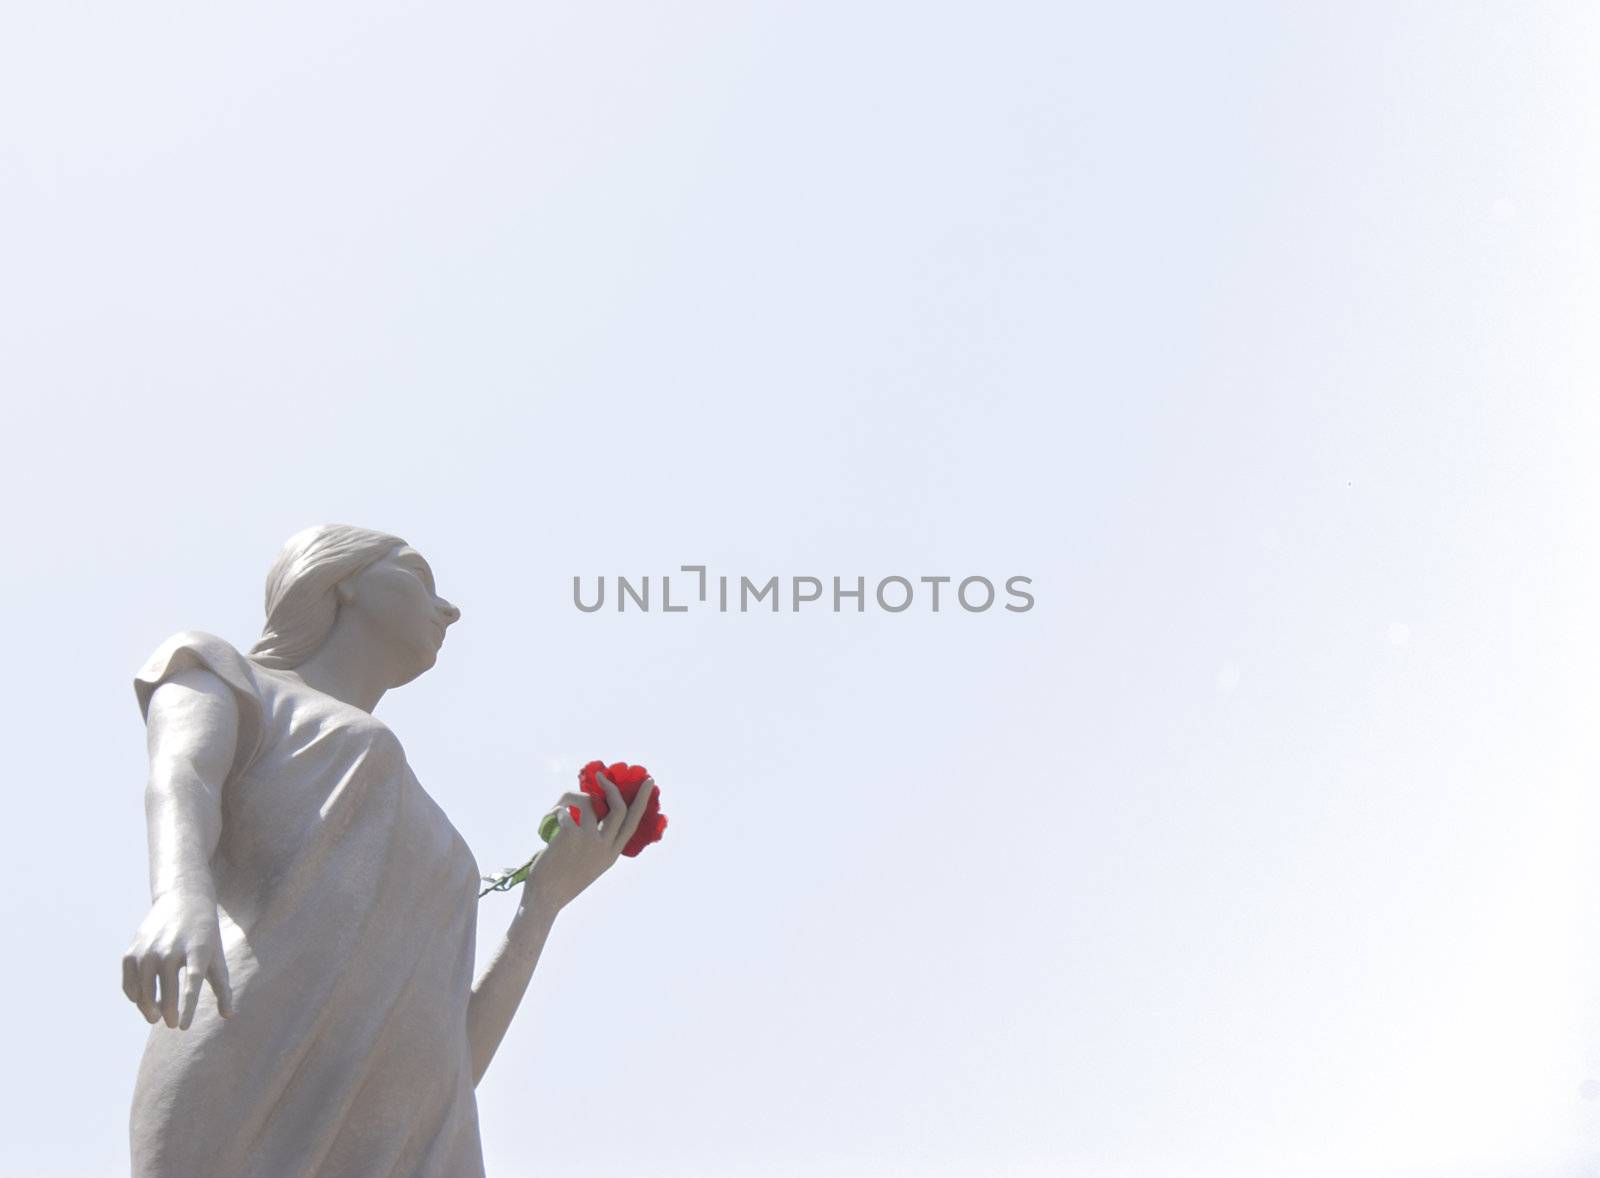 sculpture of Santa rosalia isolated on white by gandolfocannatella